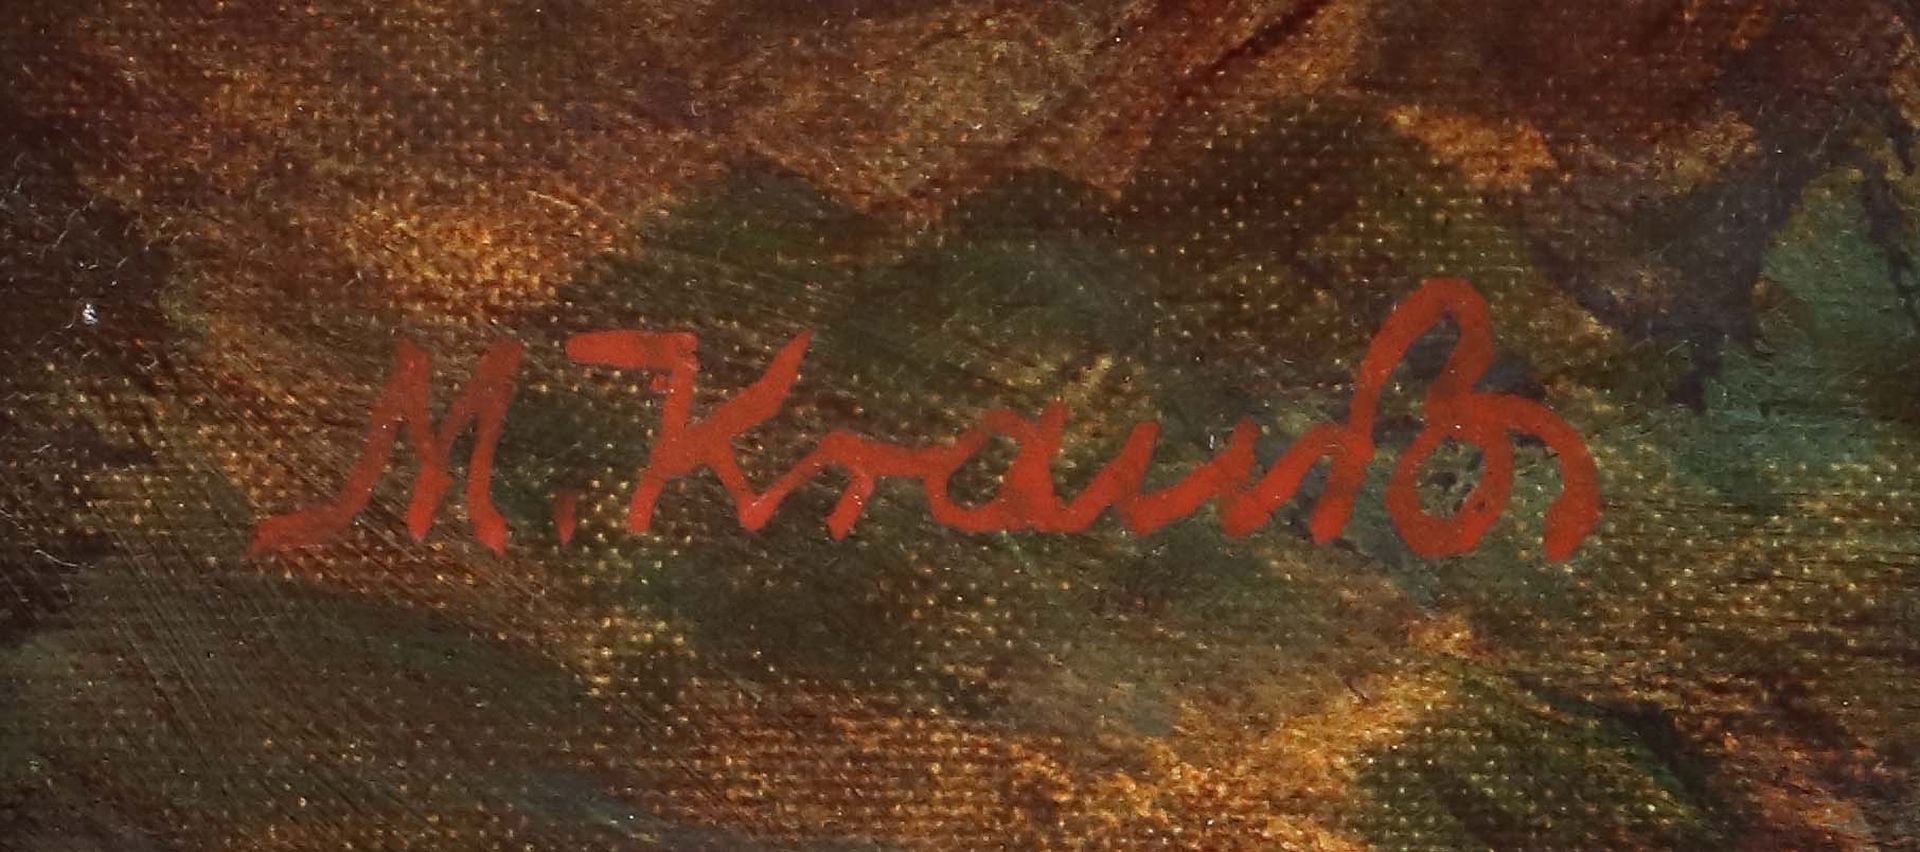 Krauss, Max Karlsbad 1902 - ?, Maler - Image 3 of 4